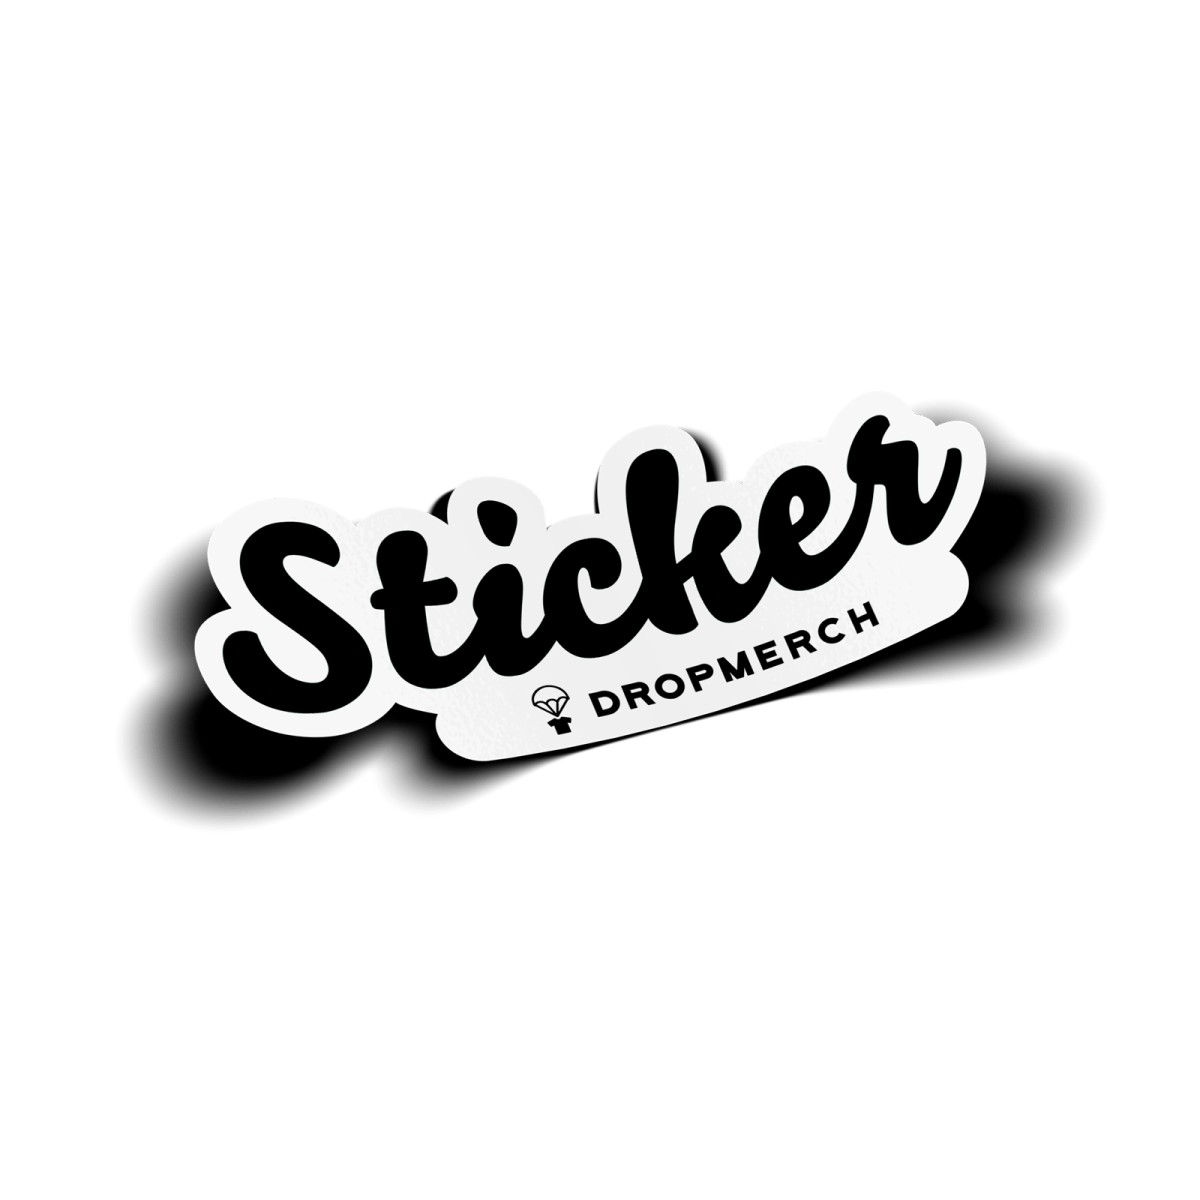 Stickers - Dropmerch